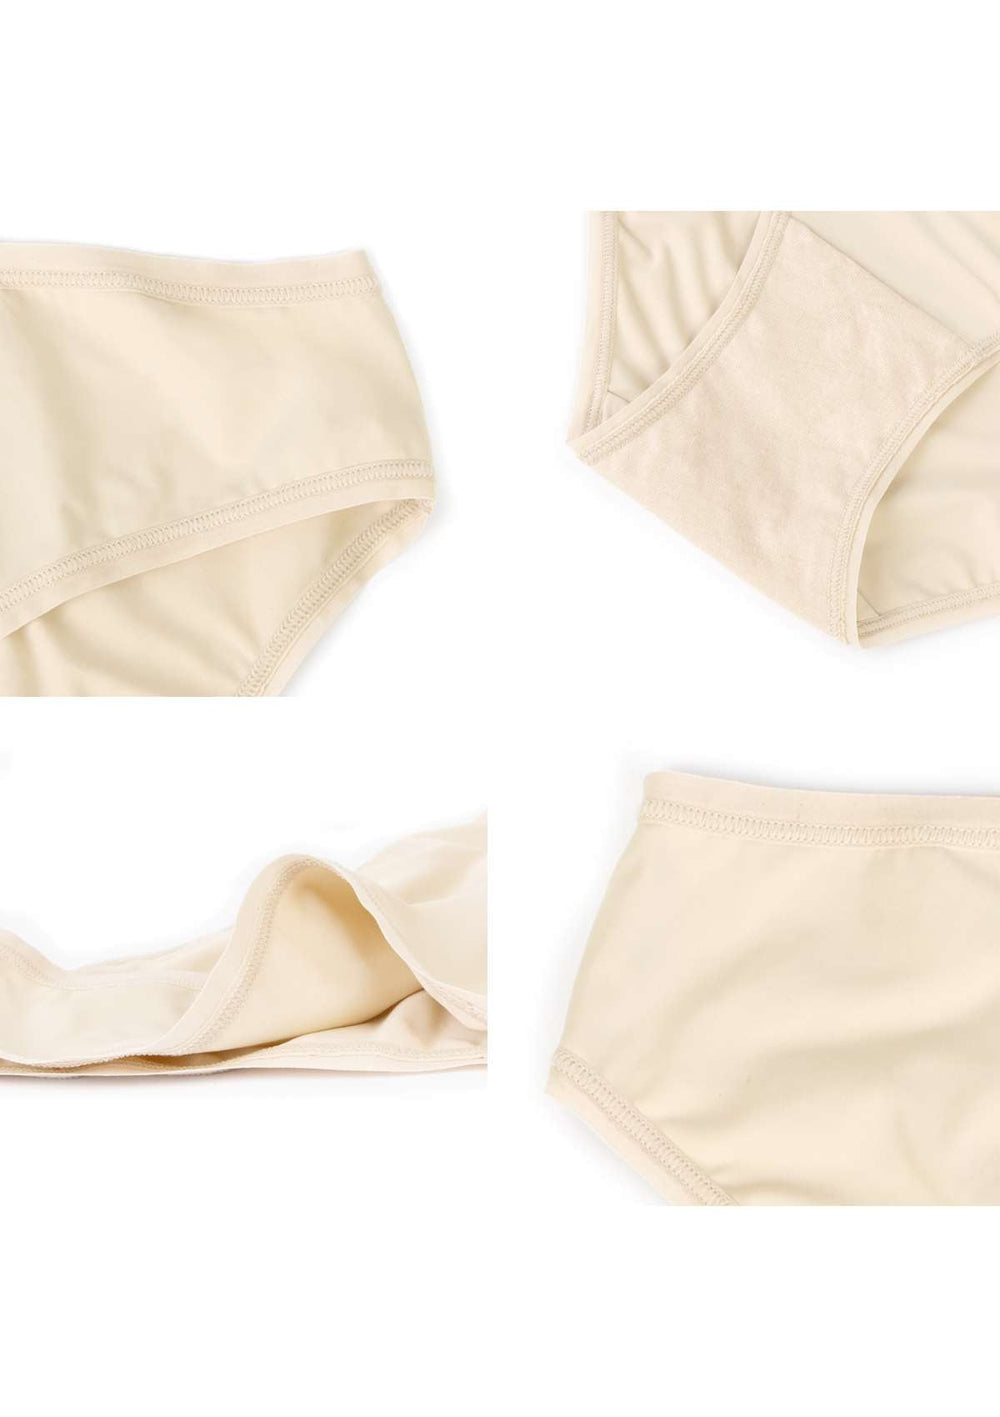 Buy Fshway Seamless Cotton Underwear Women No Show Bikini Panties